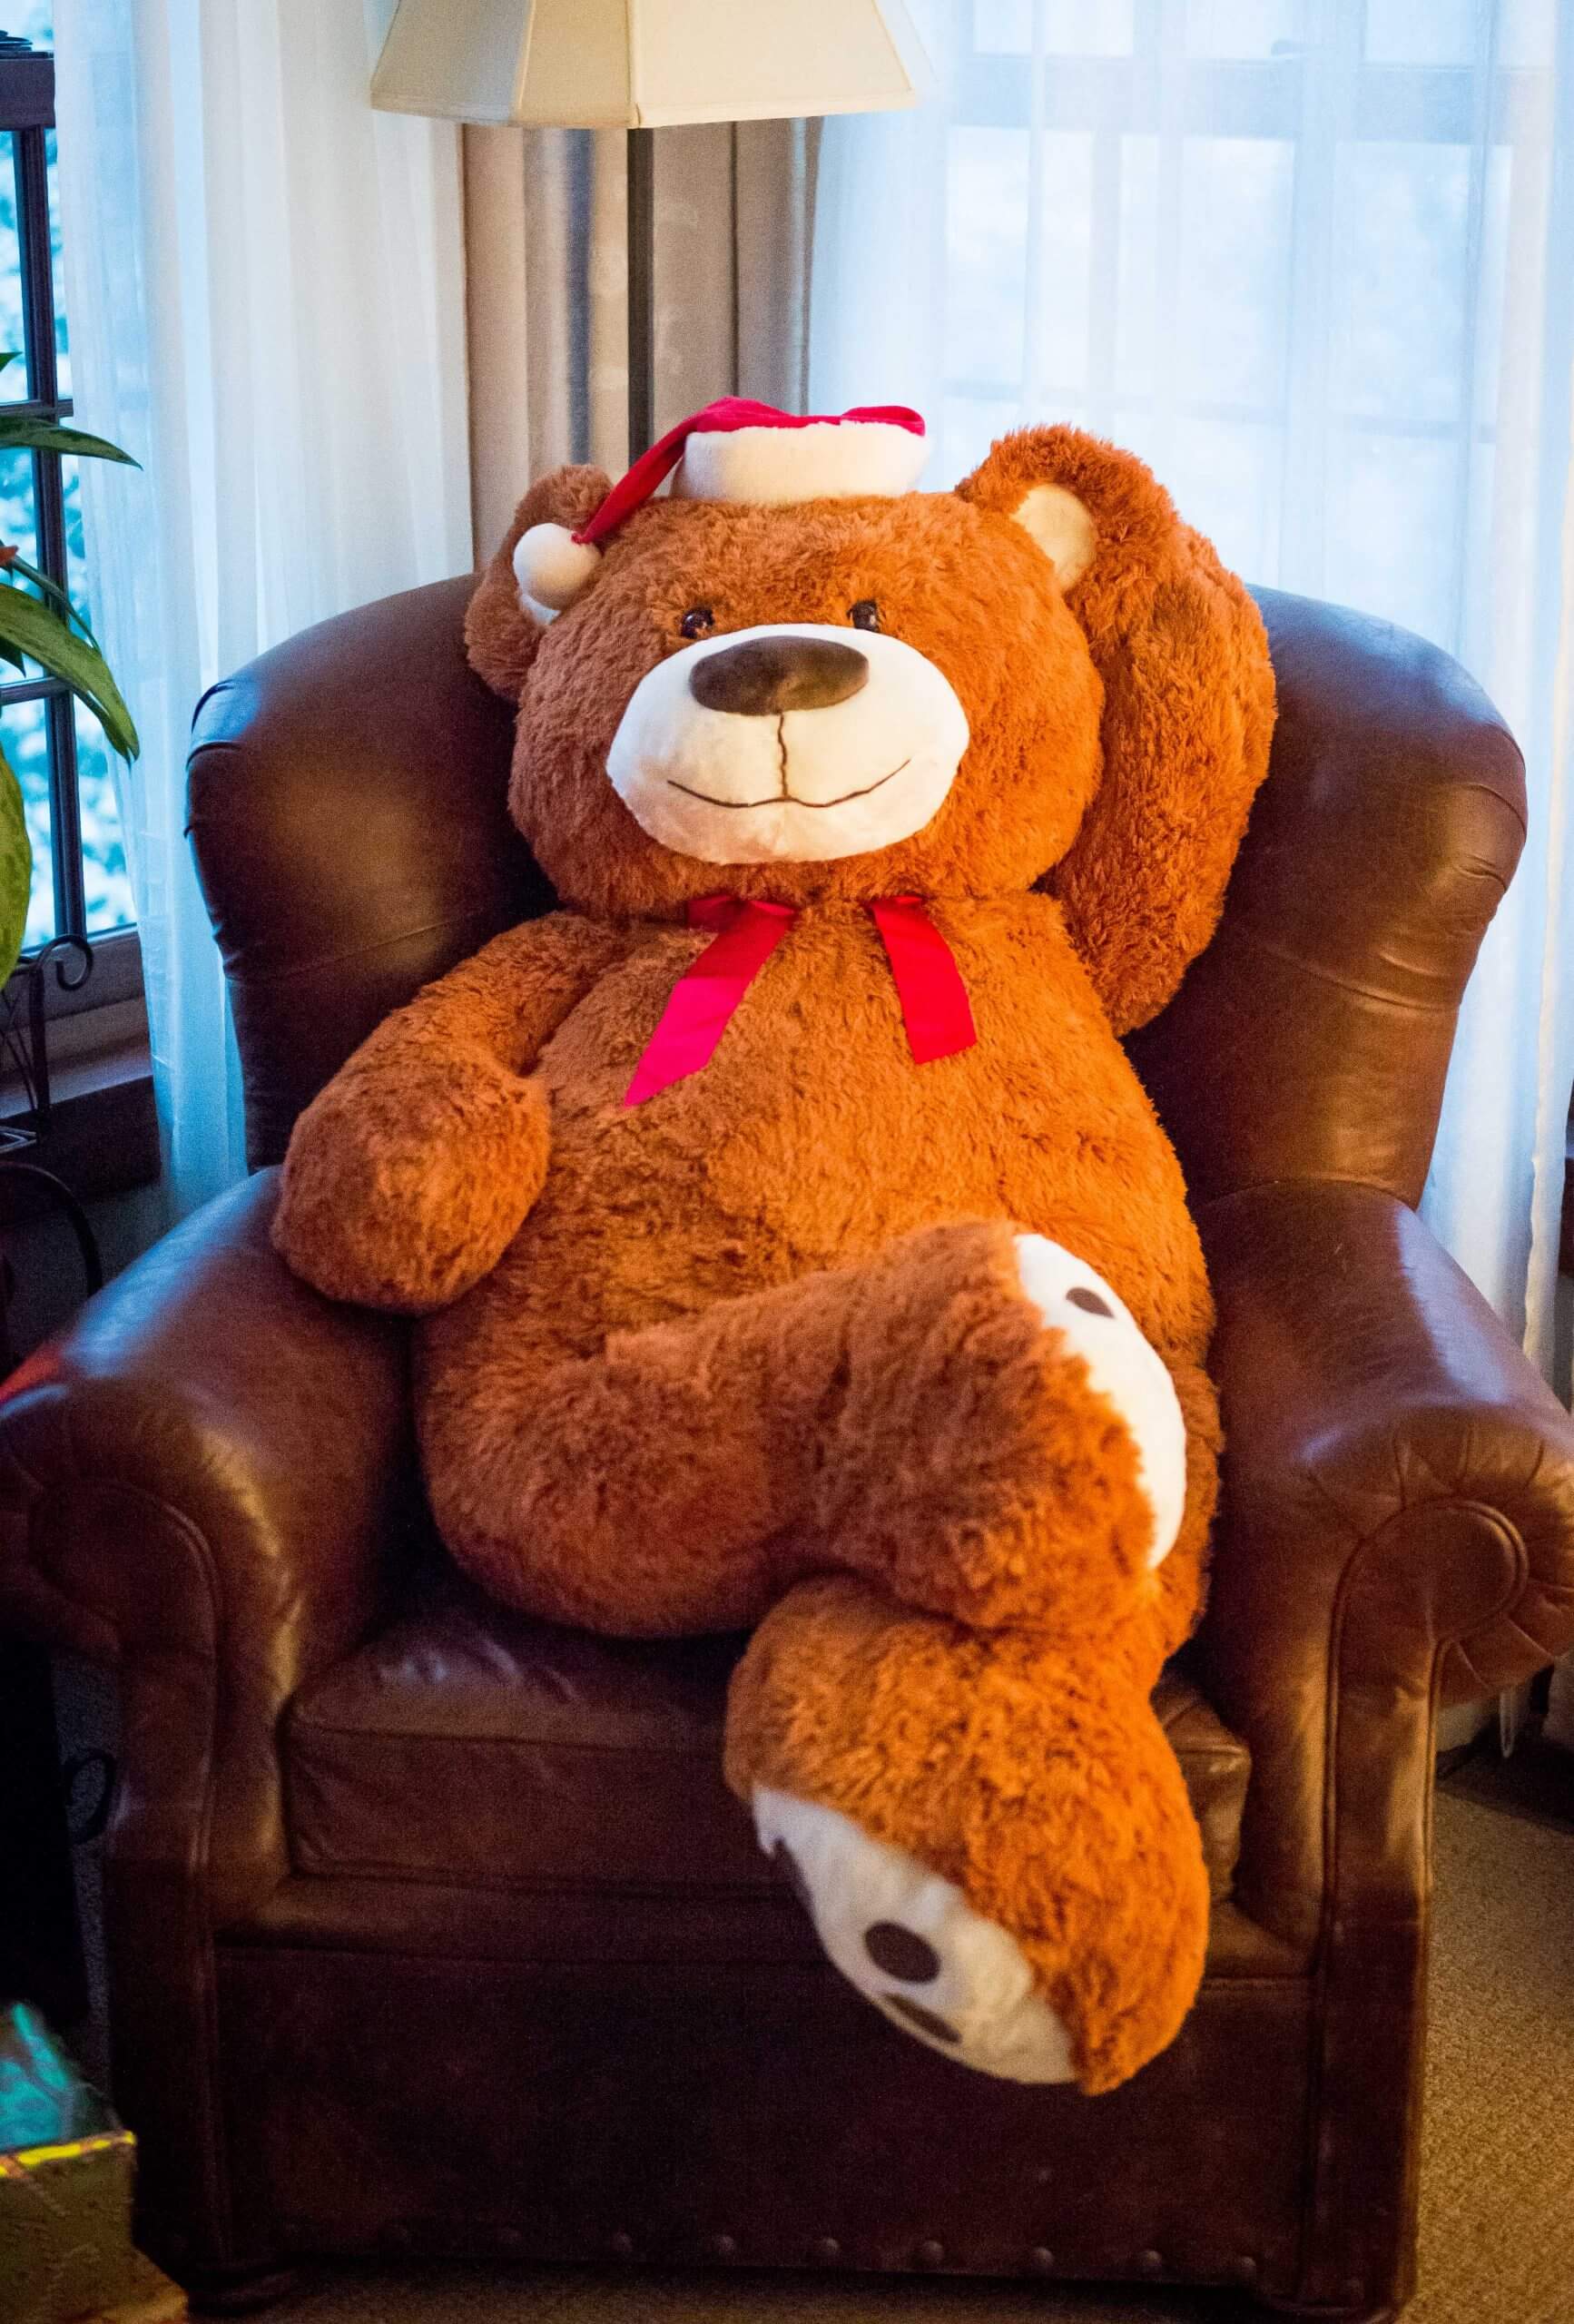 A large stuffed teddy bear reclines in a leather chair. The bear wears a santa hat.